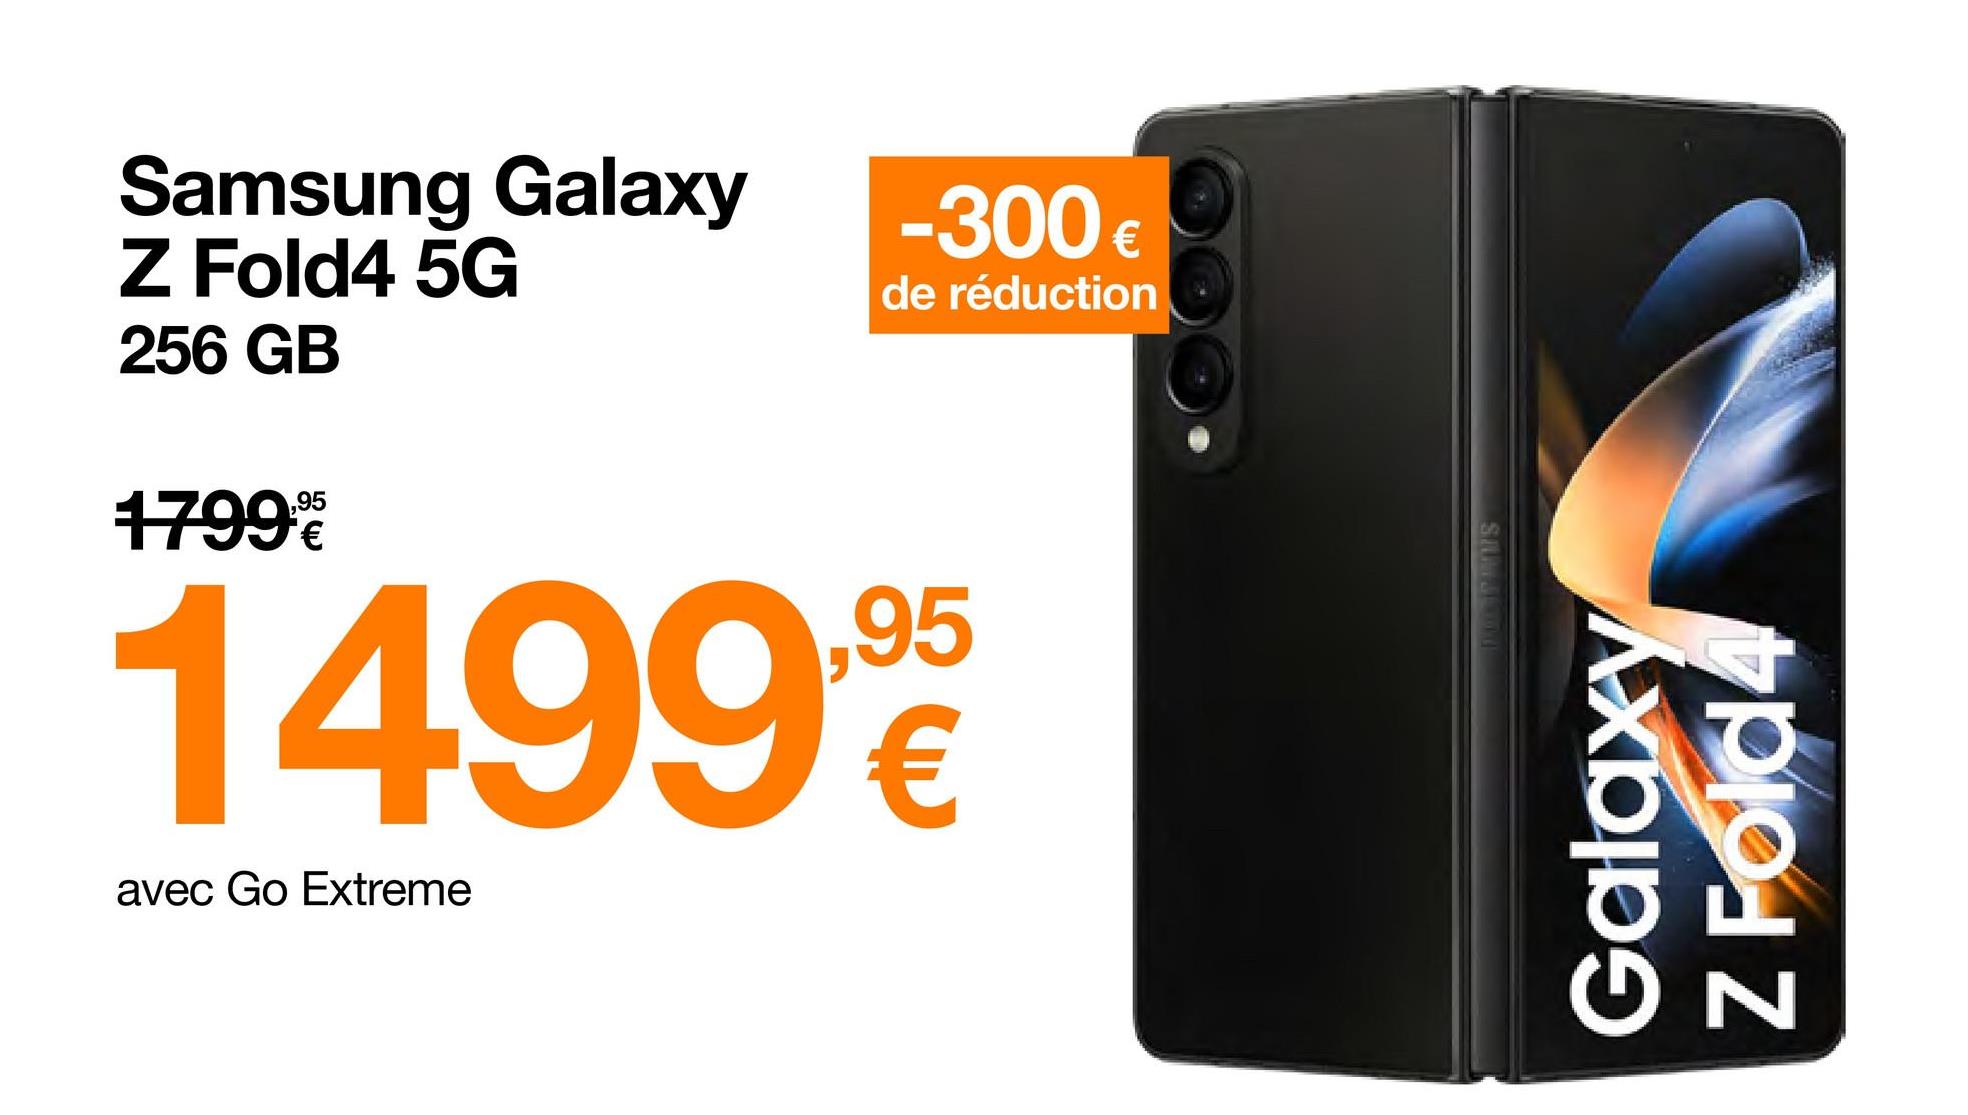 Samsung Galaxy
Z Fold4 5G
256 GB
1799€
-300 €
de réduction
1499,95
avec Go Extreme
Galax
Z Fold4
N